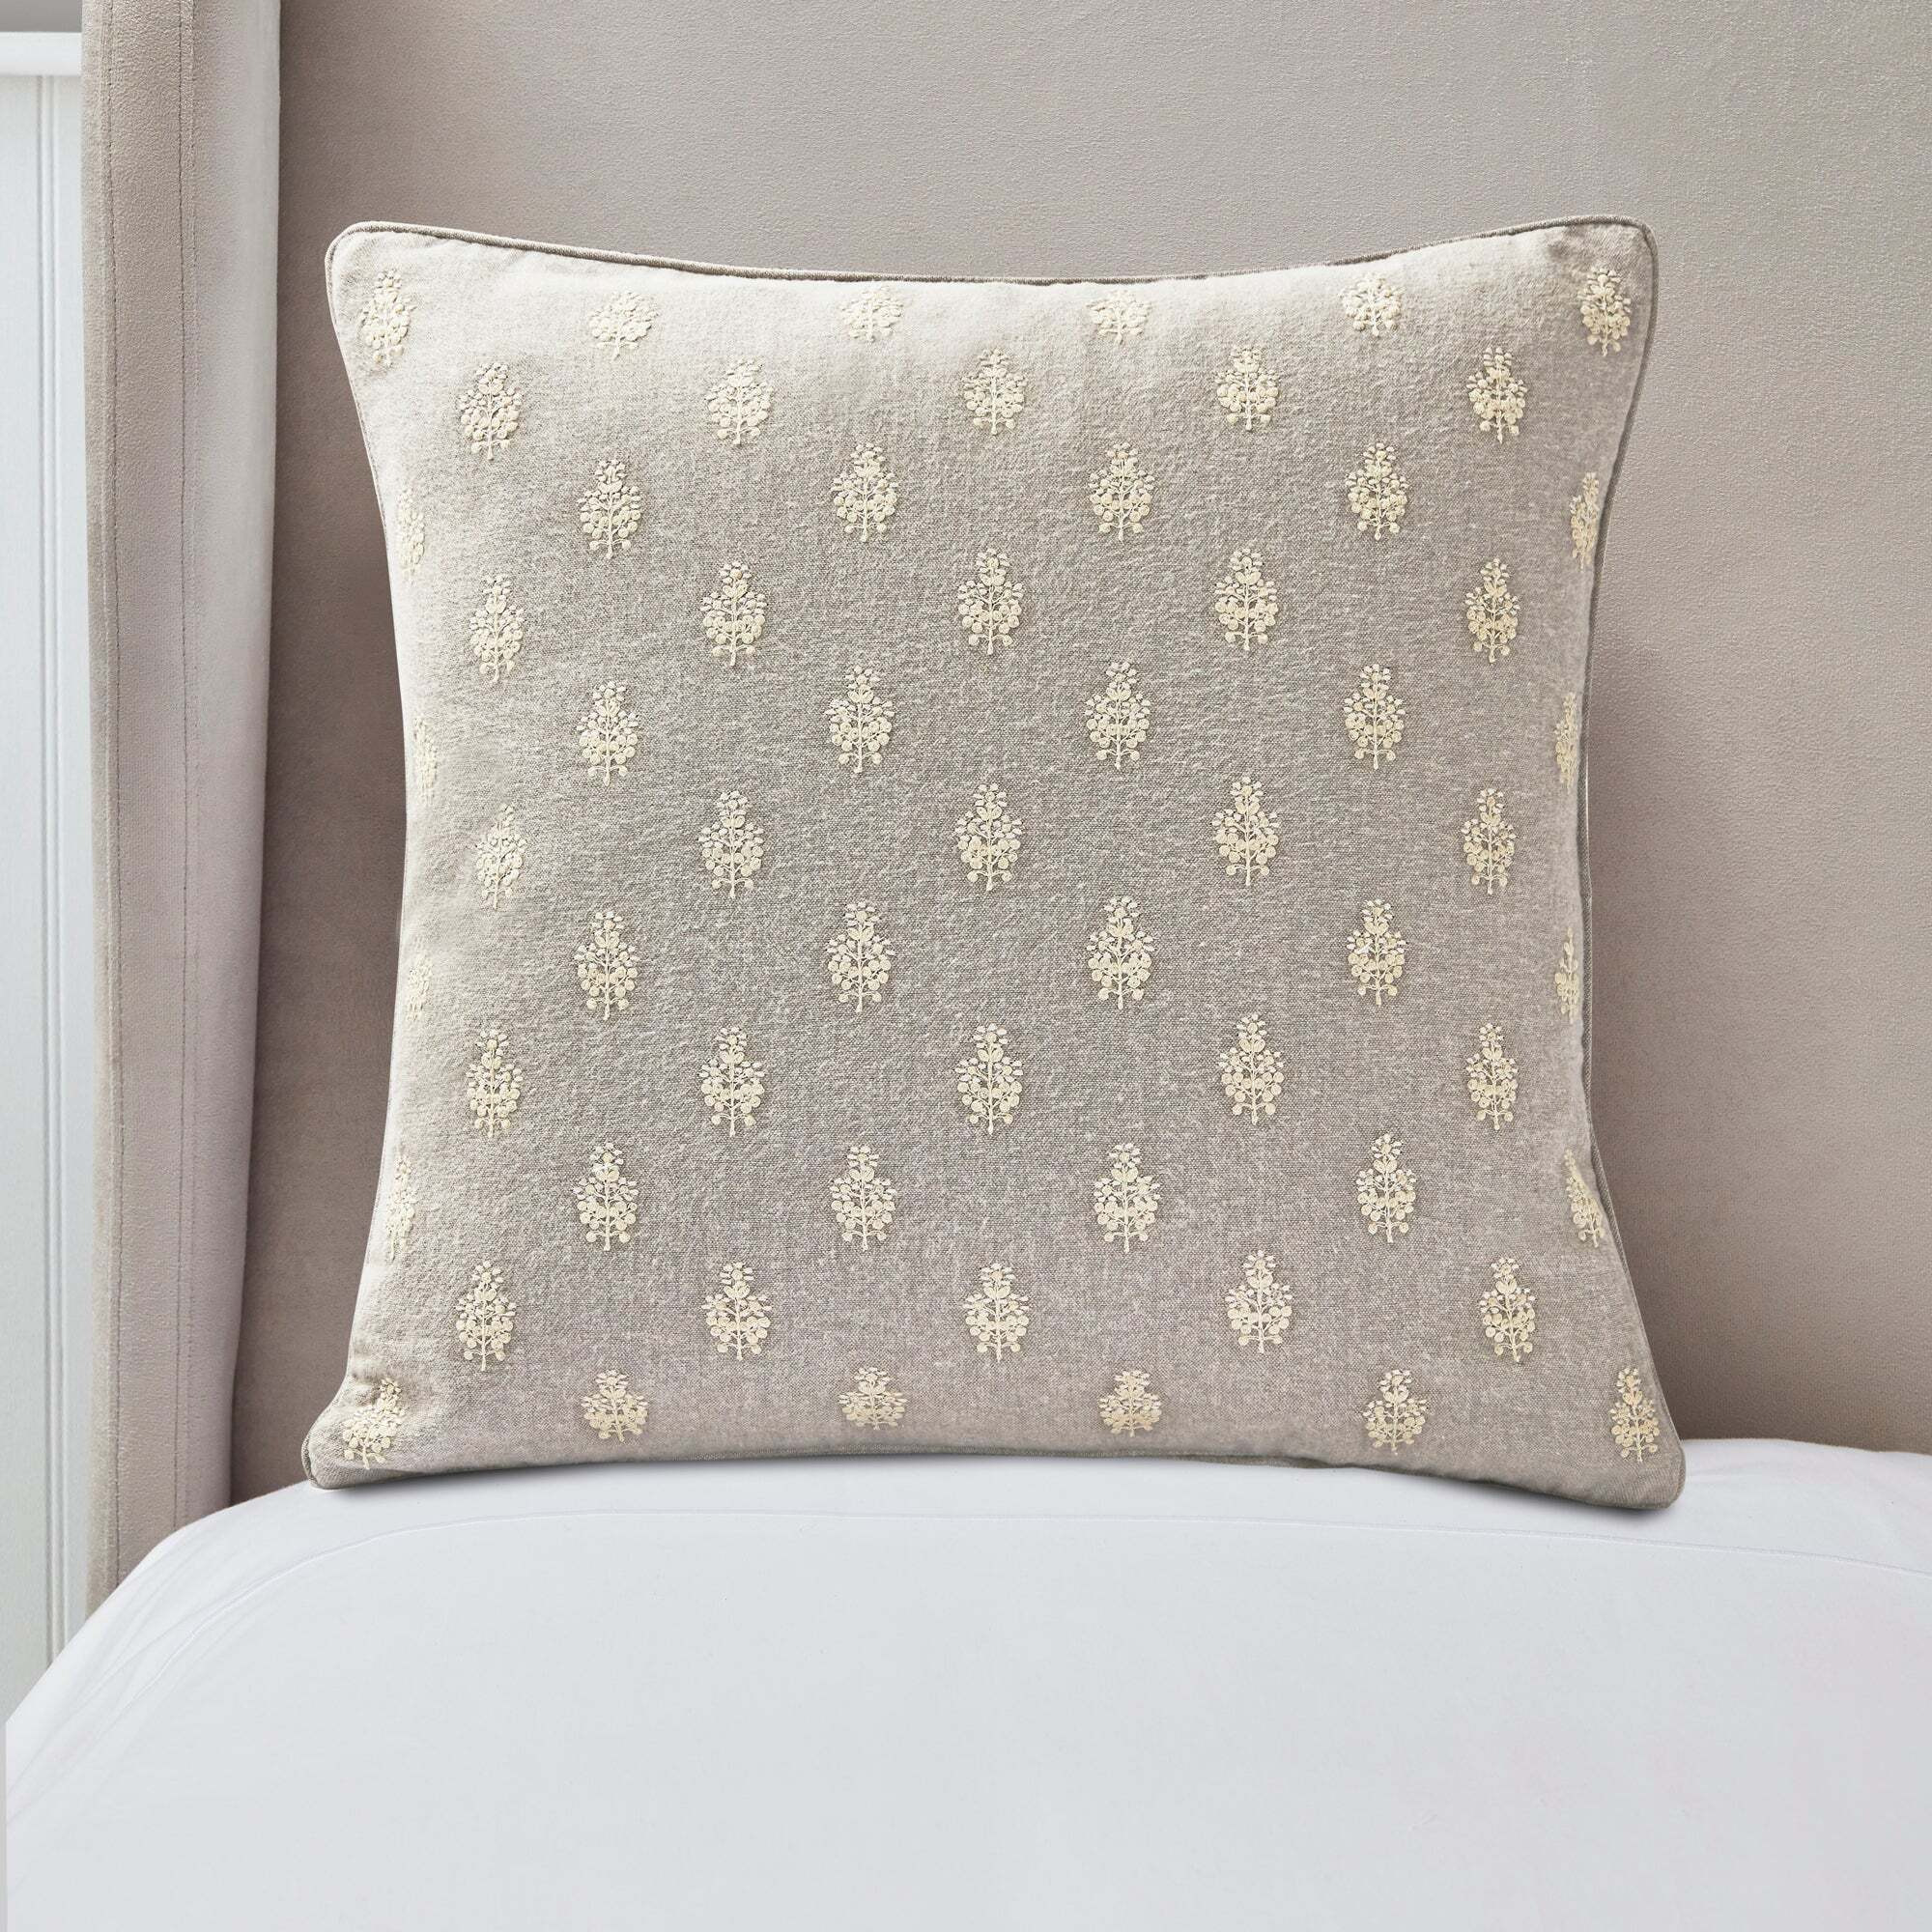 Dorma Purity Carro Embroidered Cushion Grey